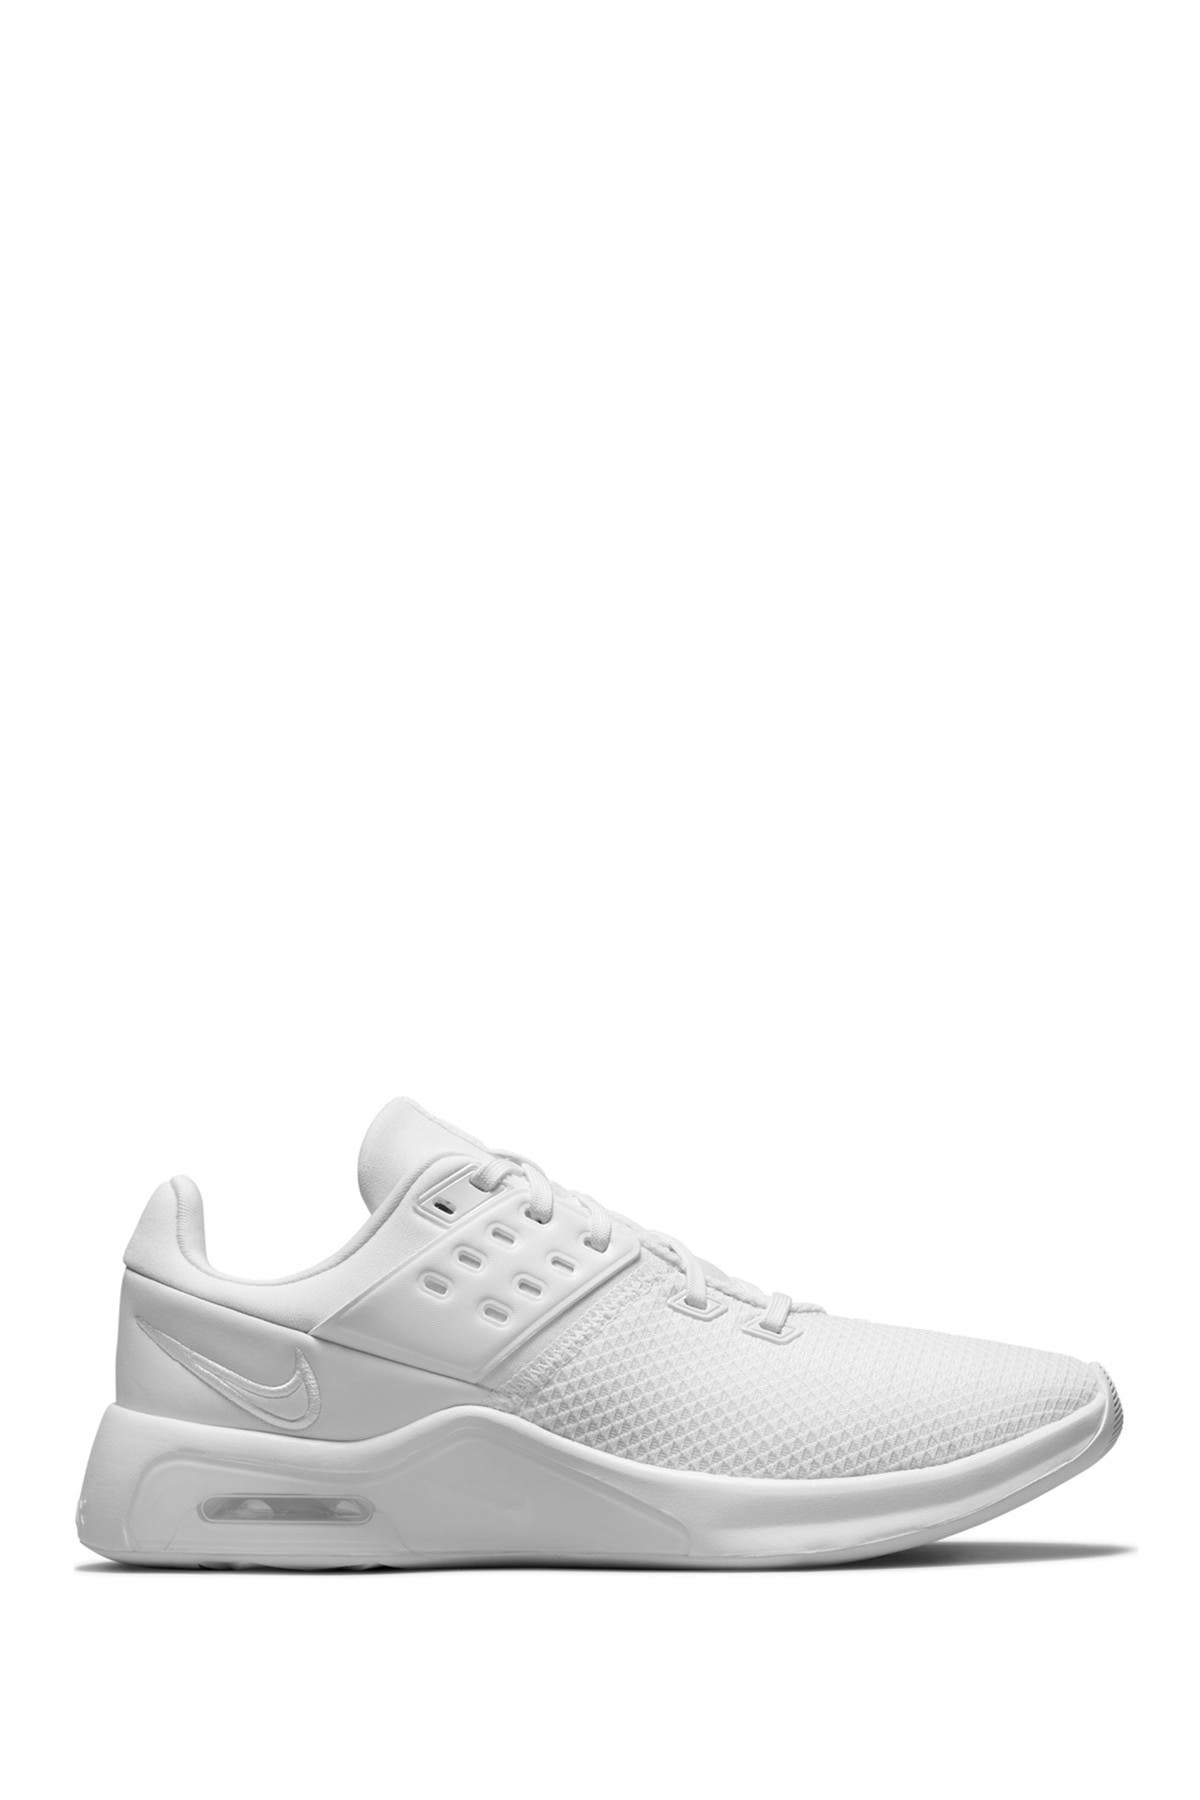 nike training air max bella sneakers in white